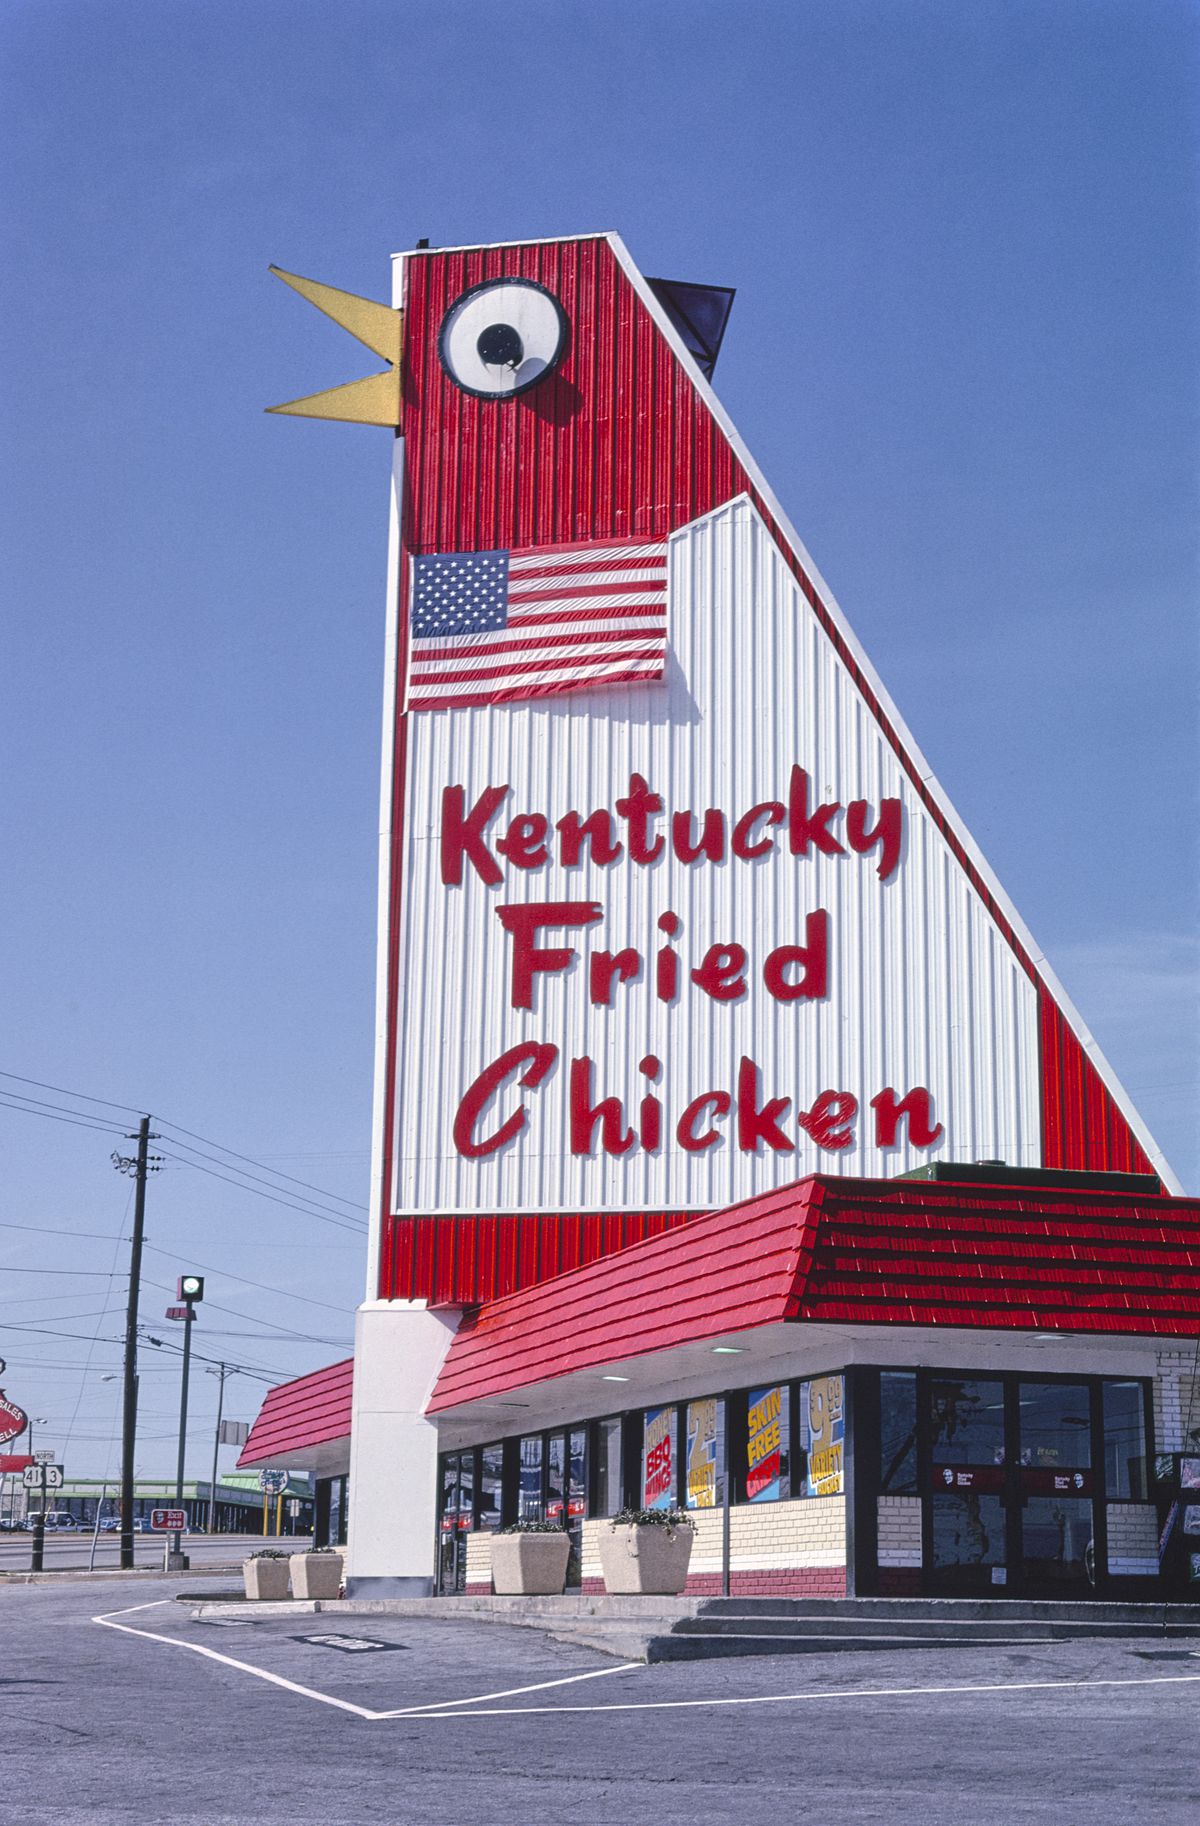 Kentucky Fried Chicken sign, Marietta, Georgia, USA, John Margolies Roadside America Photograph Archive, 1992